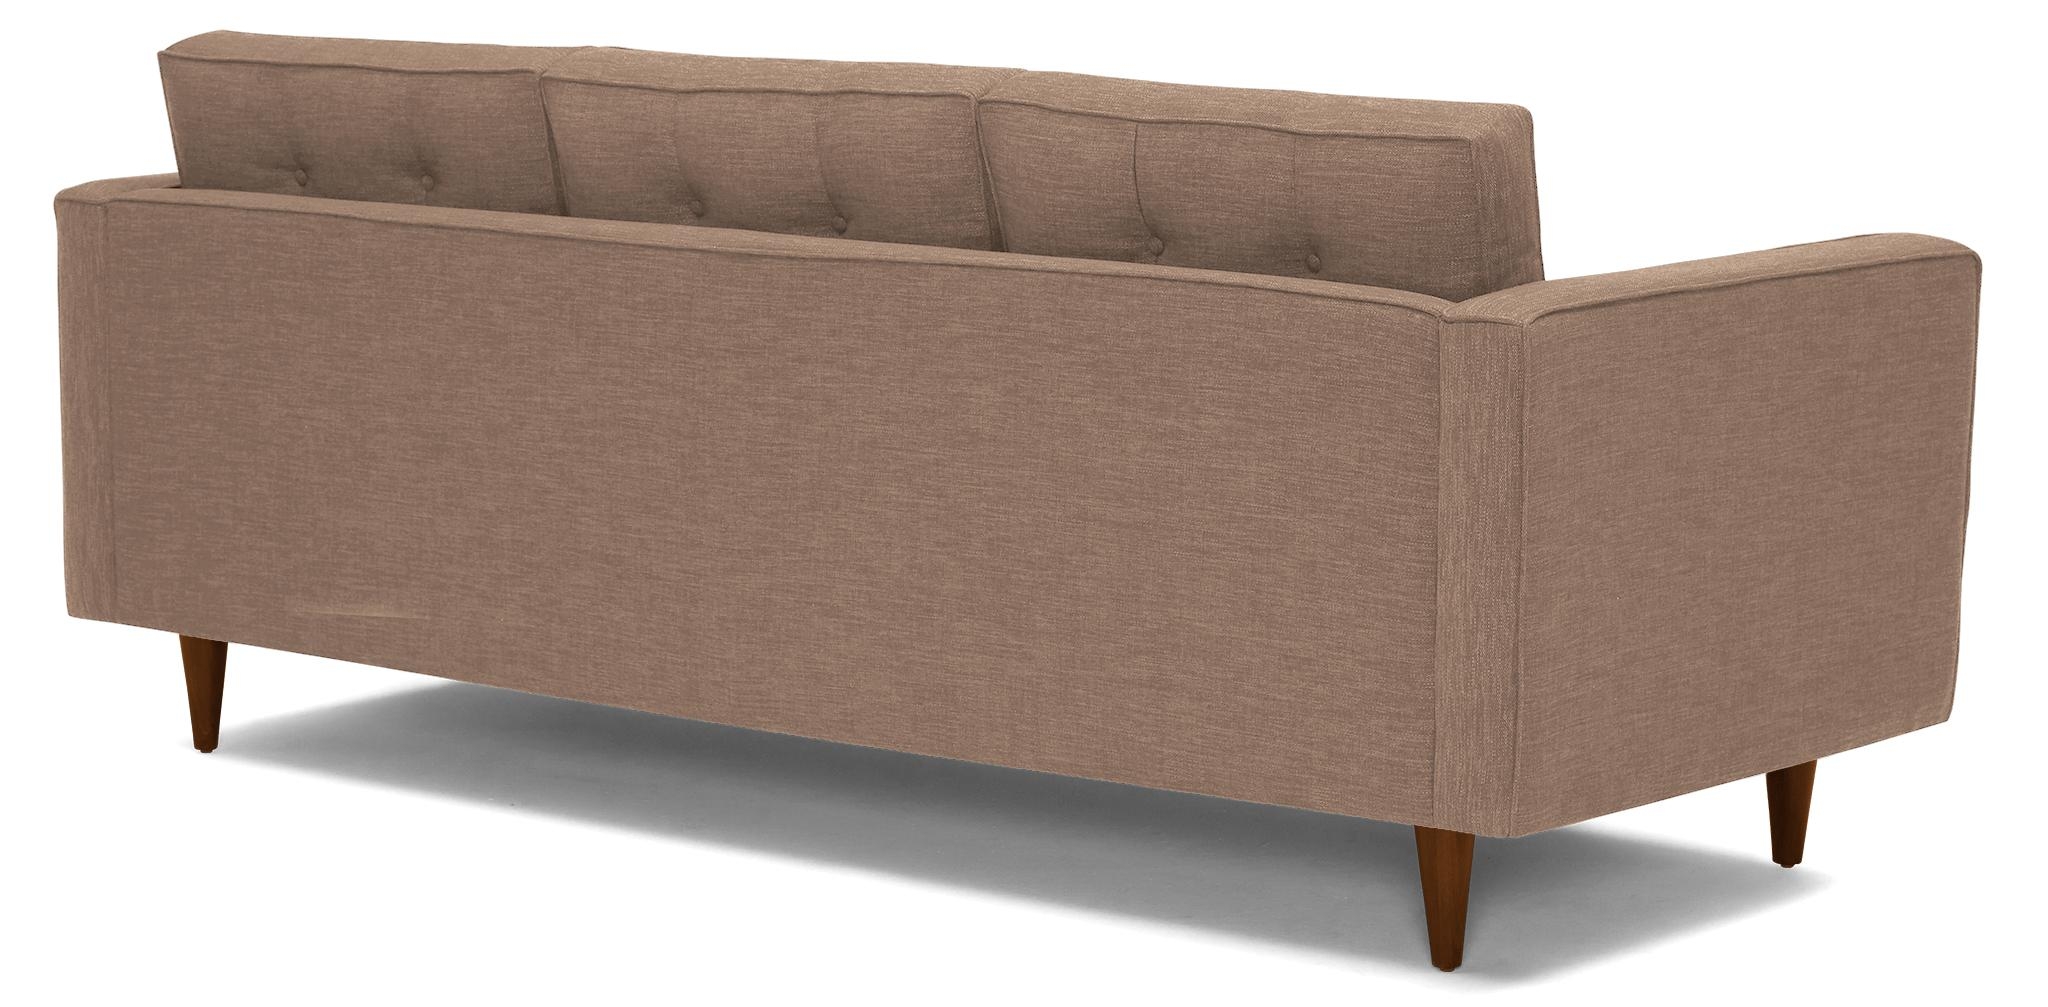 Pink Braxton Mid Century Modern Sofa - Royale Blush - Mocha - Image 3